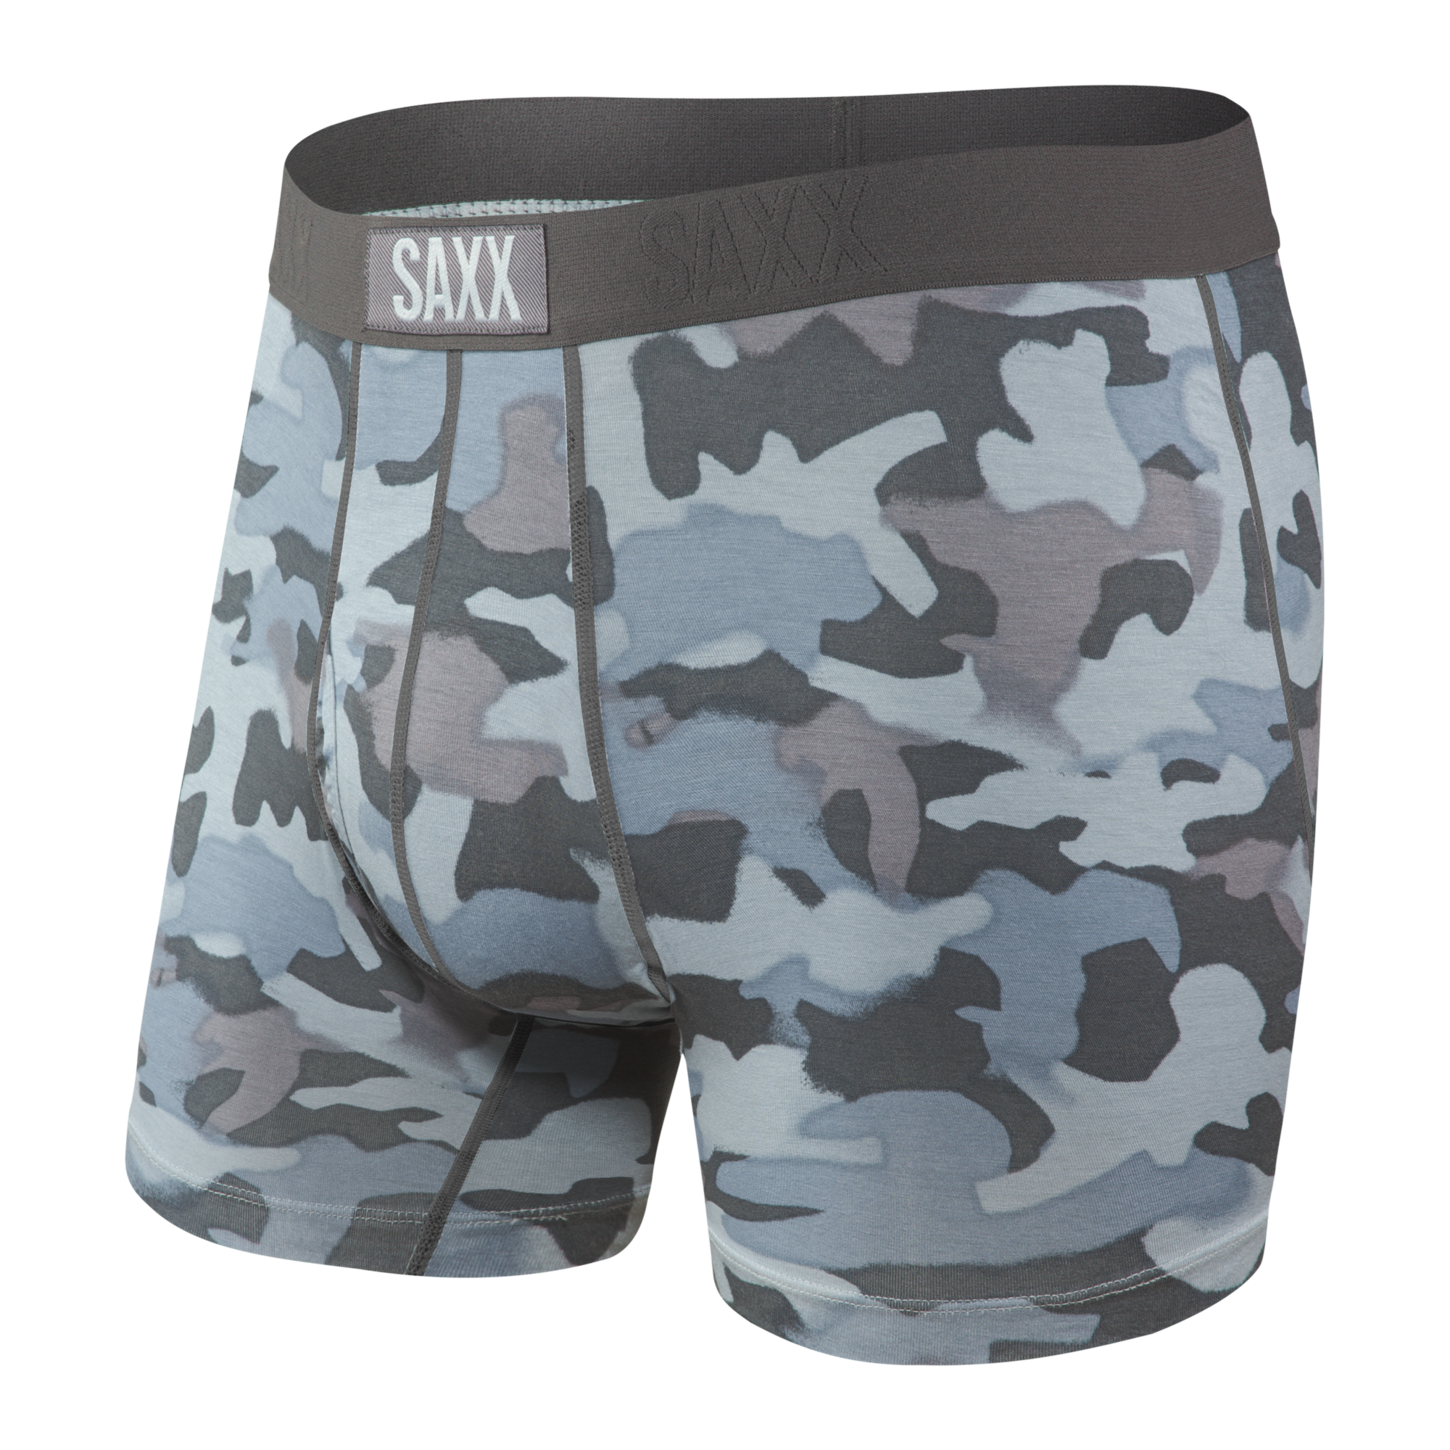 SAXX Underwear - ULTRA Boxer Brief Fly - Grey banner stripe - Size Small -  for sale online